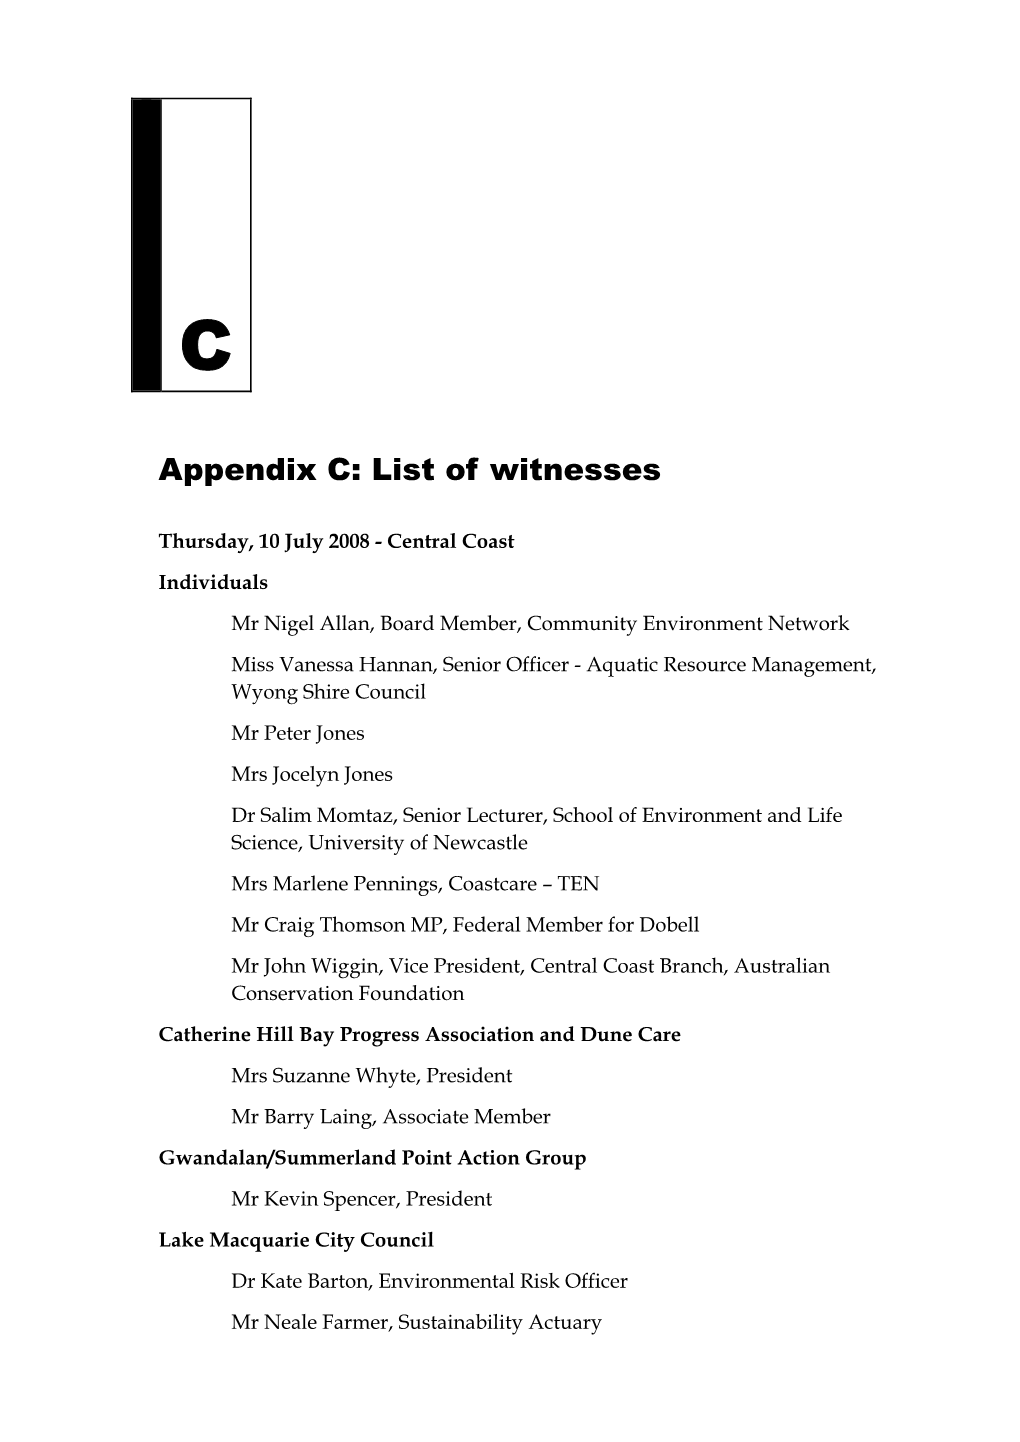 Appendix C: List of Witnesses